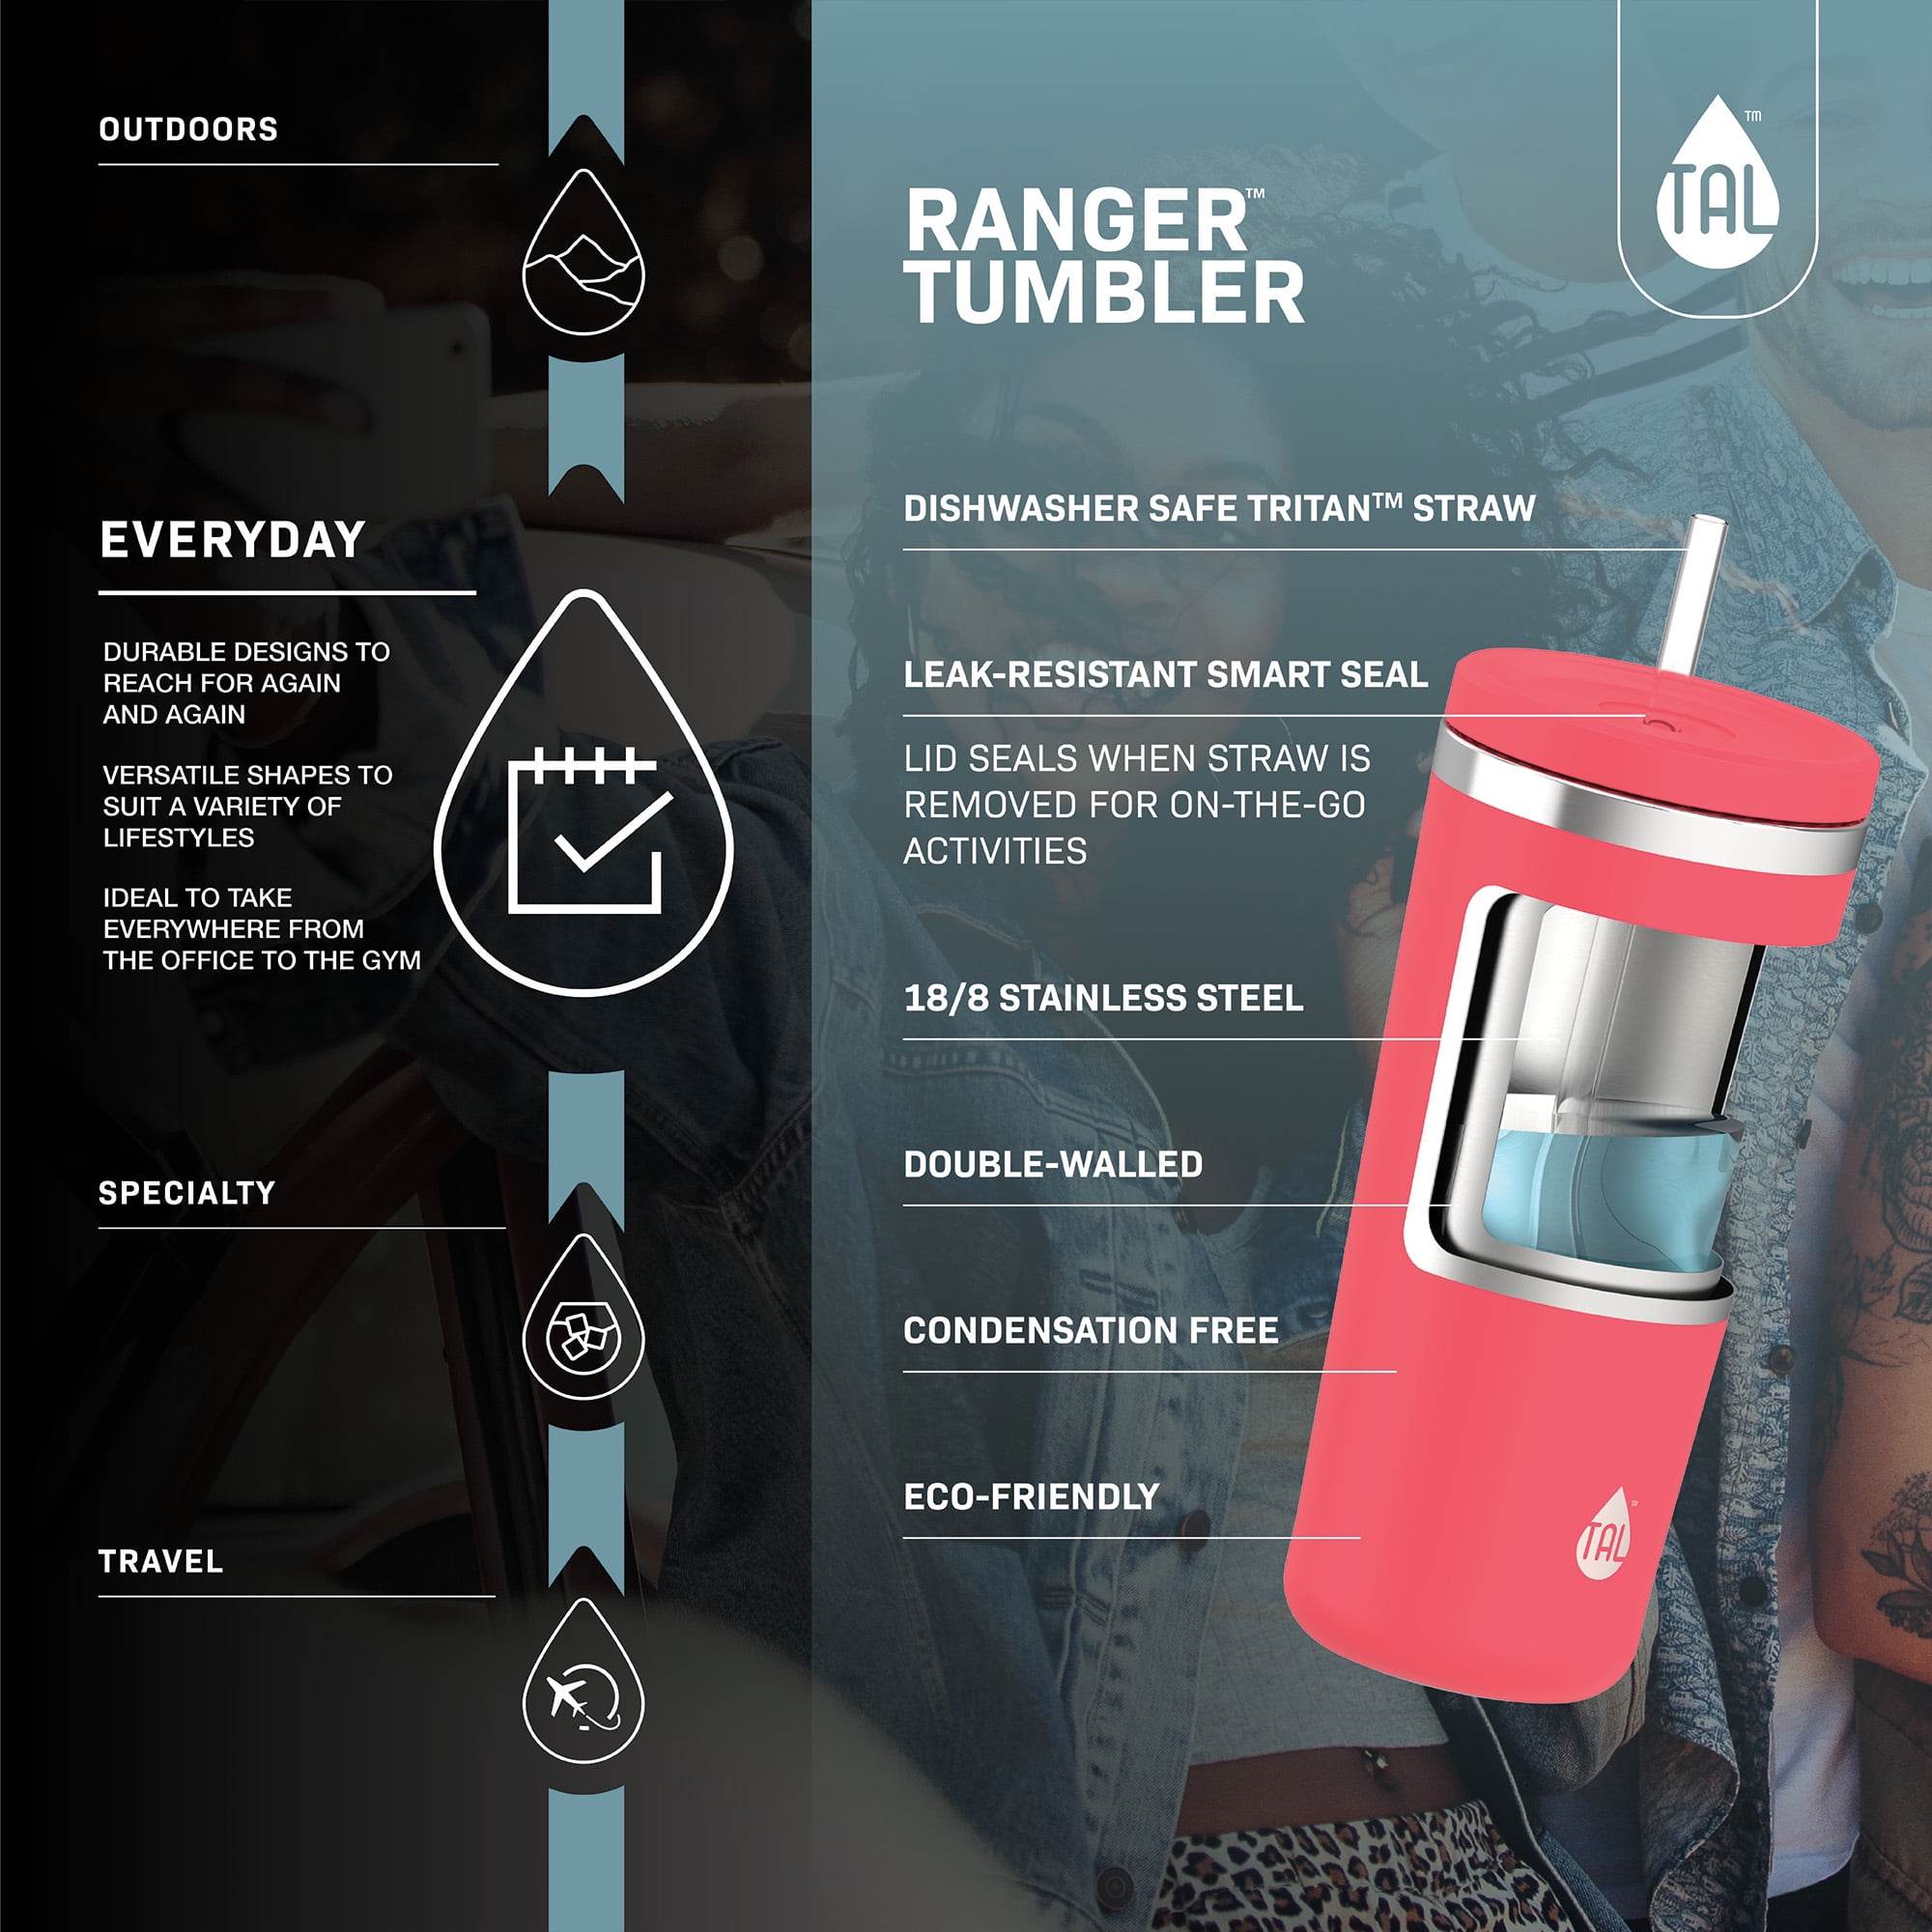 24oz Ranger Tumbler